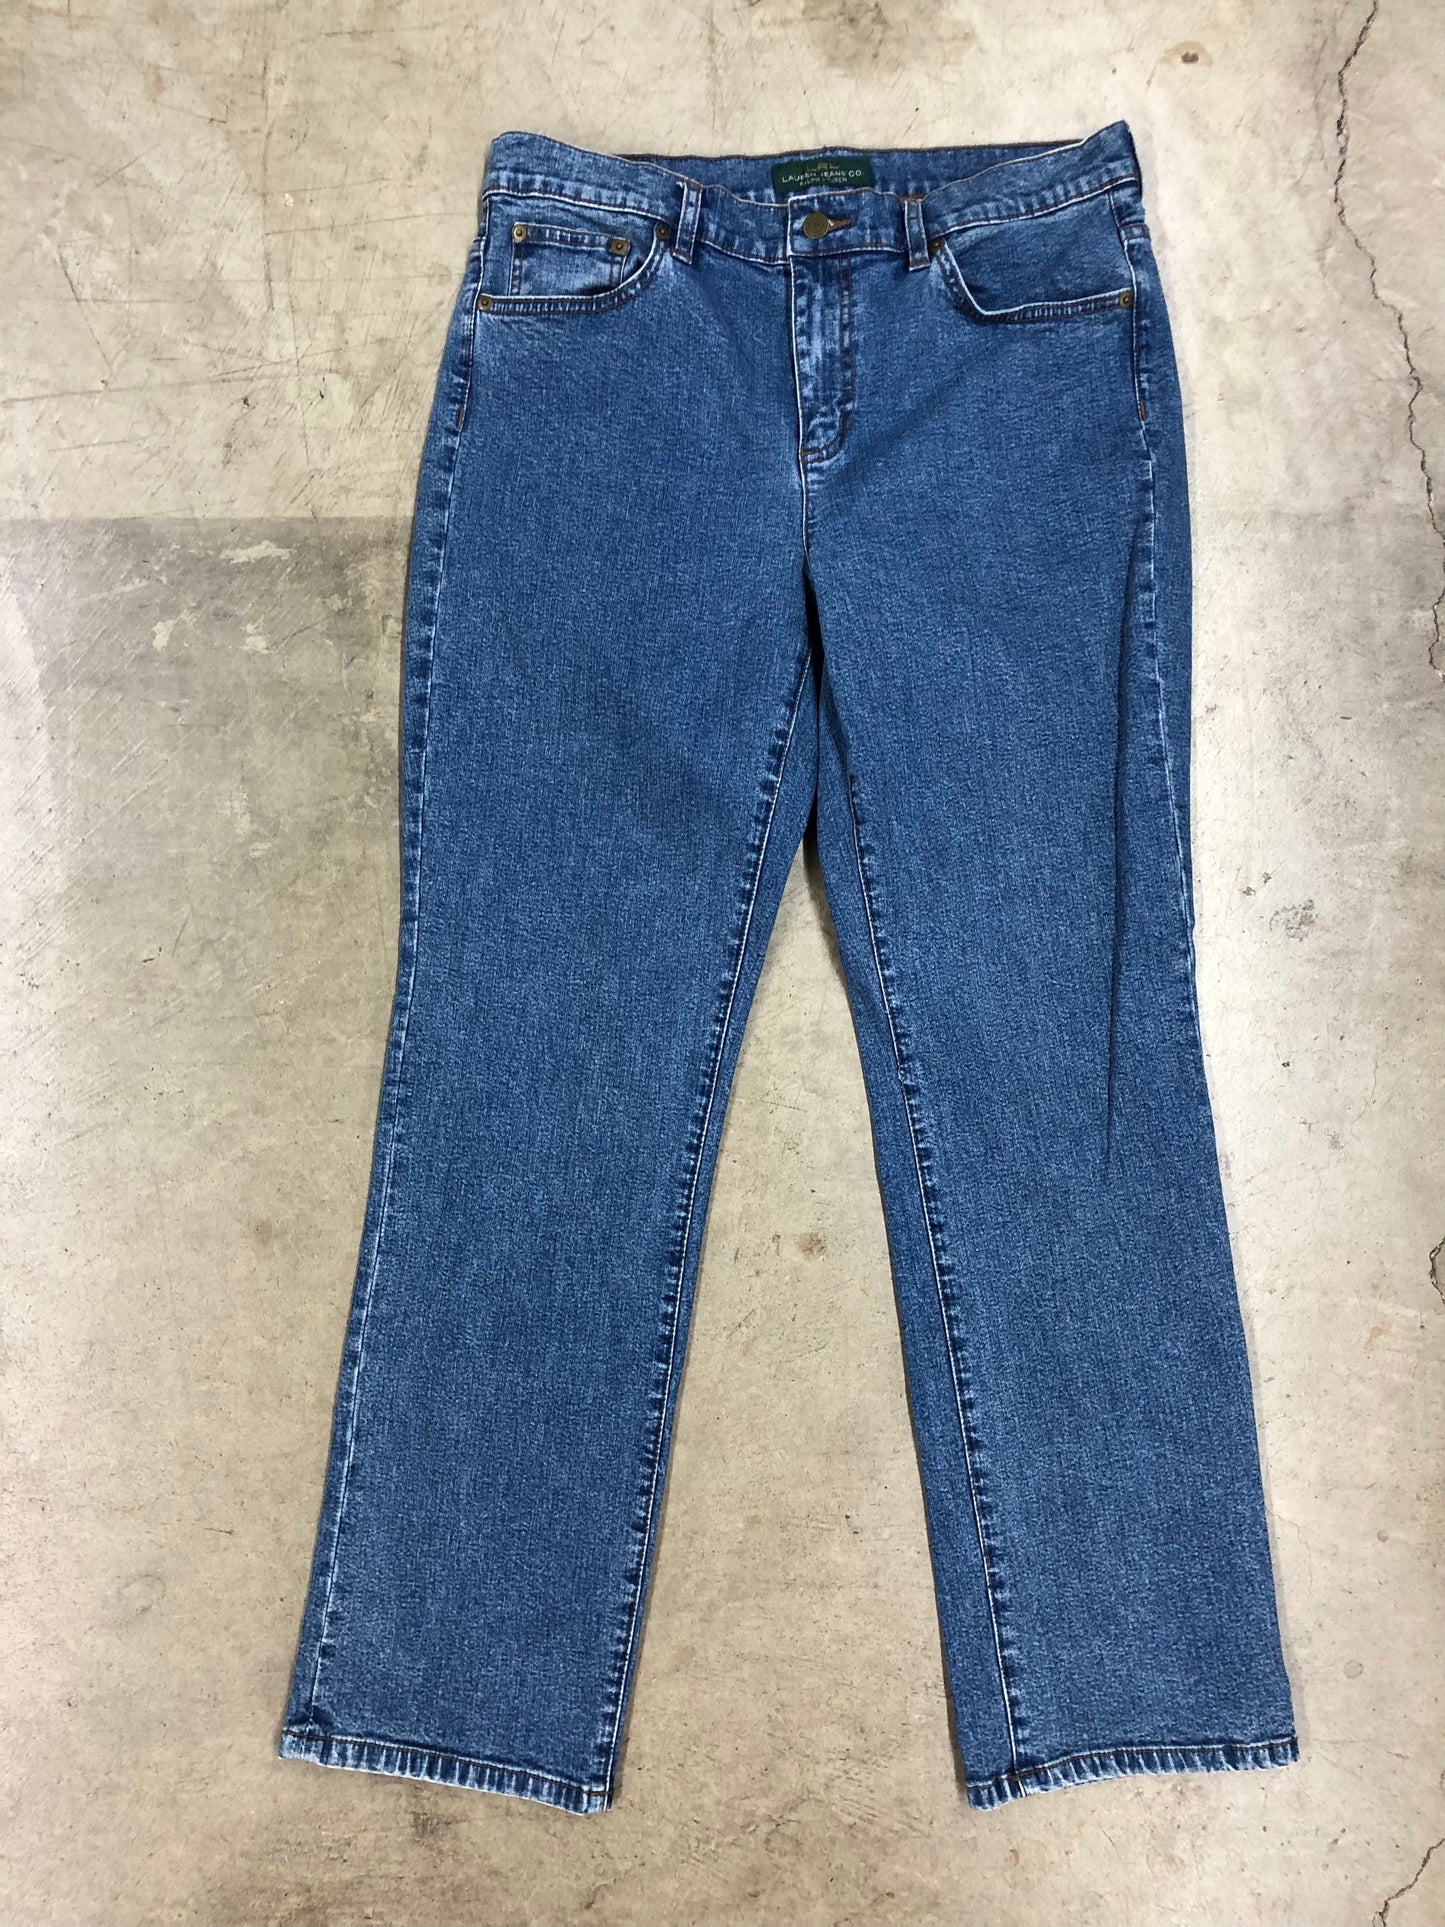 VTG Ralph Lauren Jeans Sz 32x30